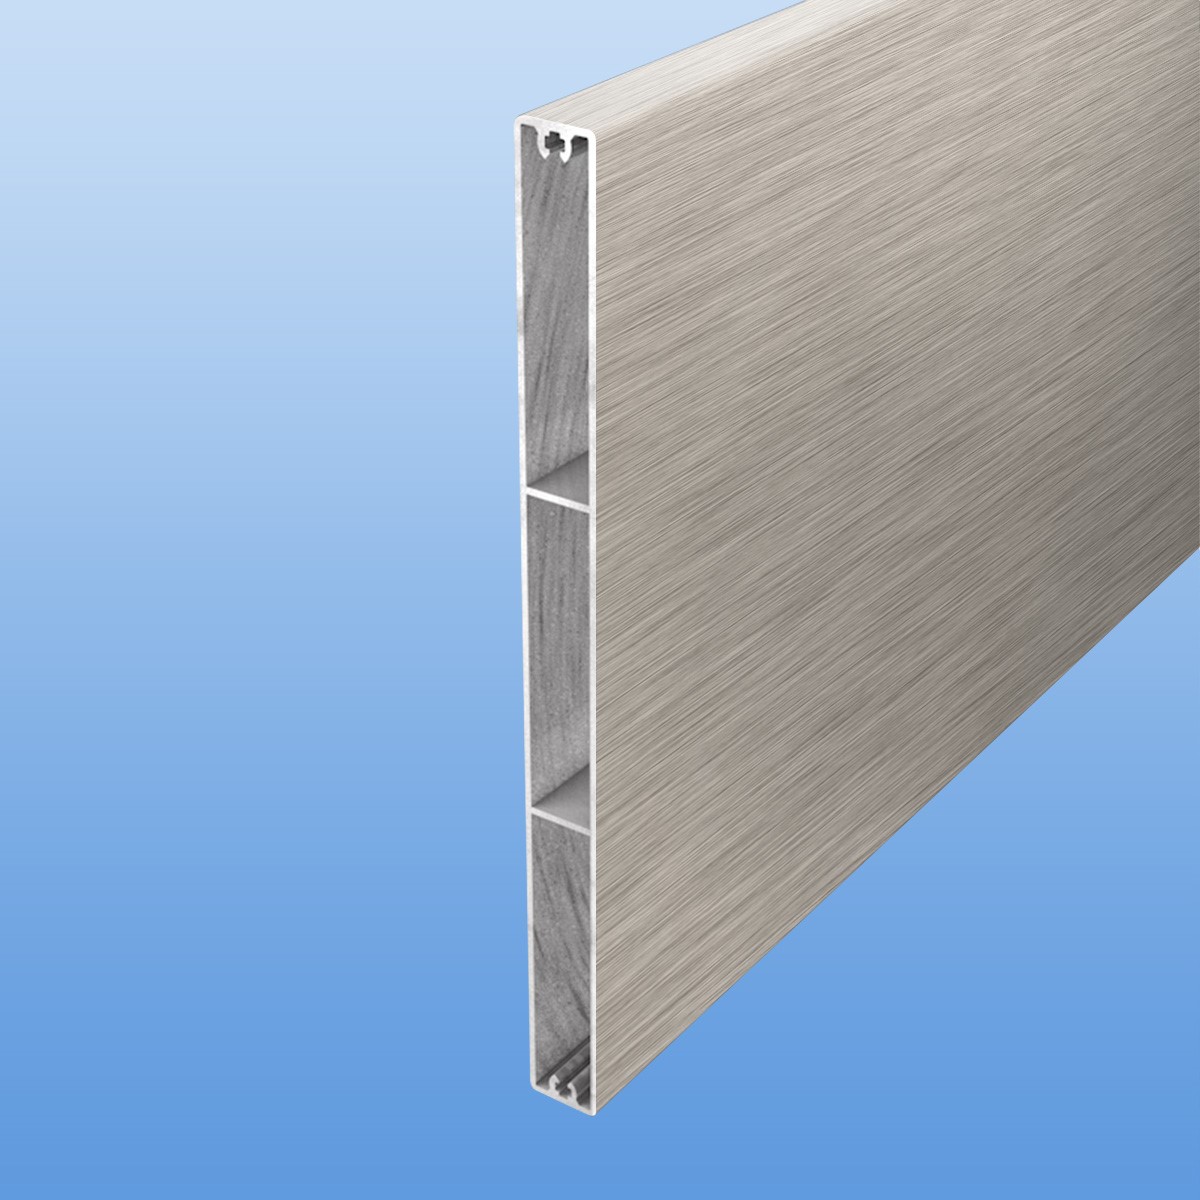 Balkonbretter aus Aluminium 200 mm breit gebürstet / brushed